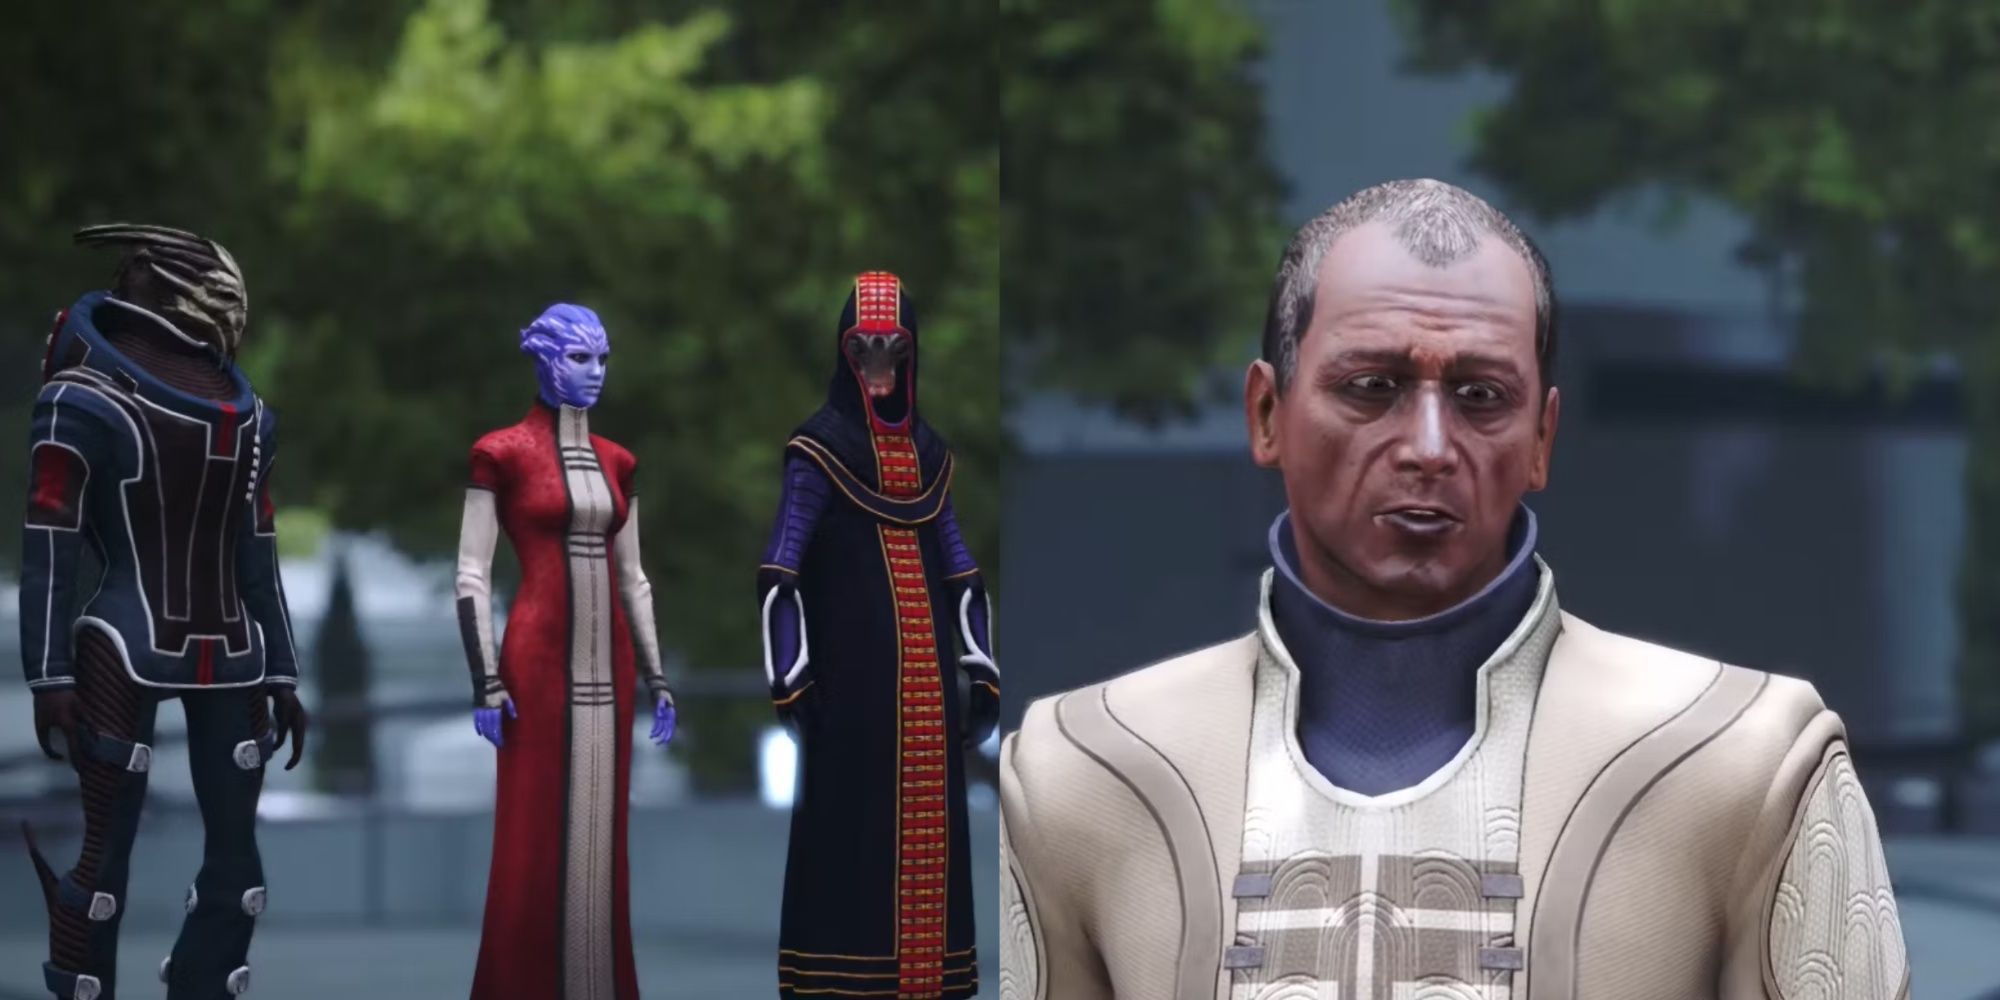 Original Mass Effect Endings Split Image Of Council and Udina